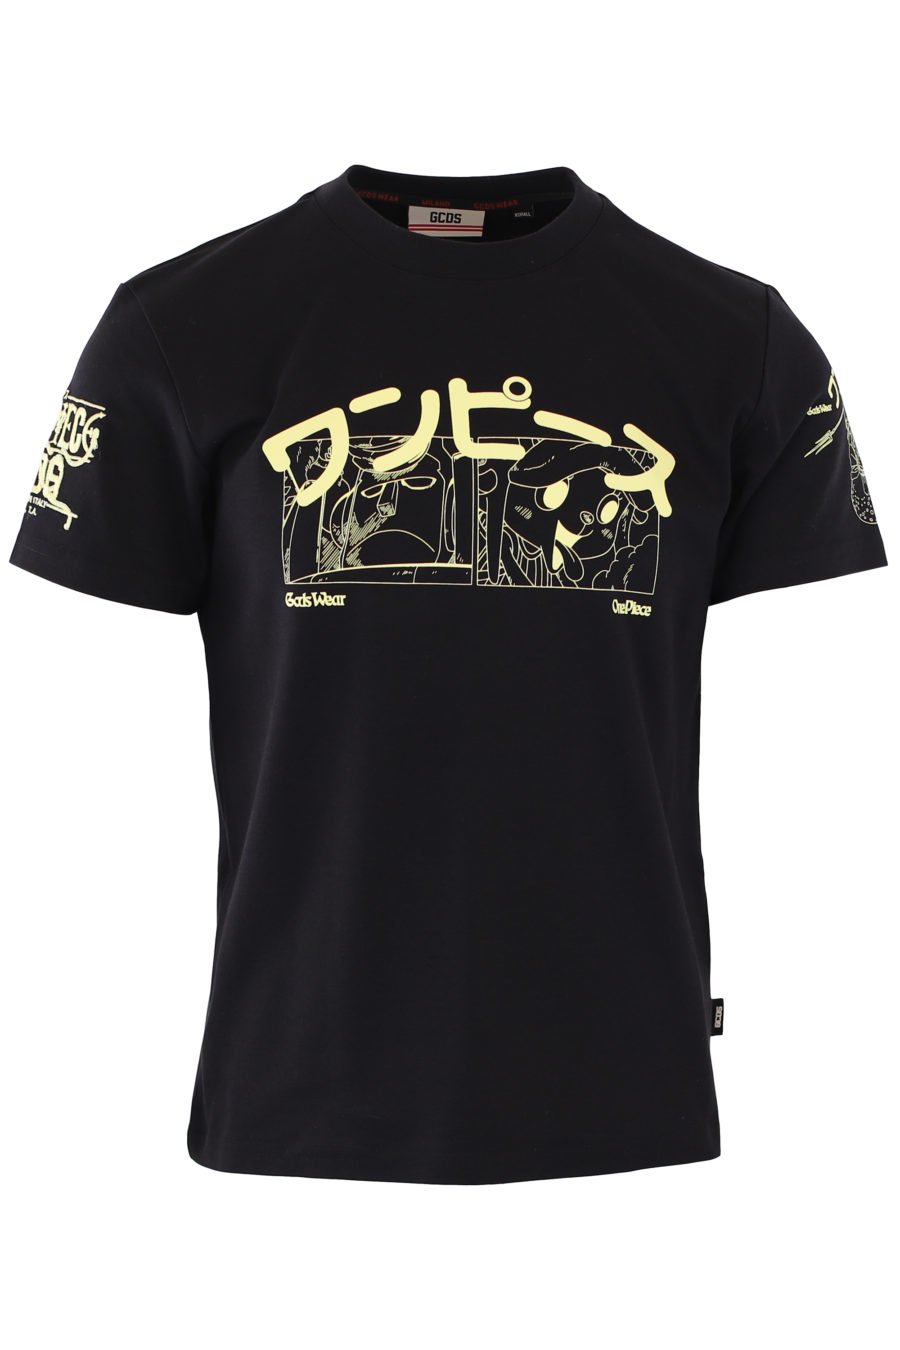 Black T-shirt with yellow anime print - IMG 1113